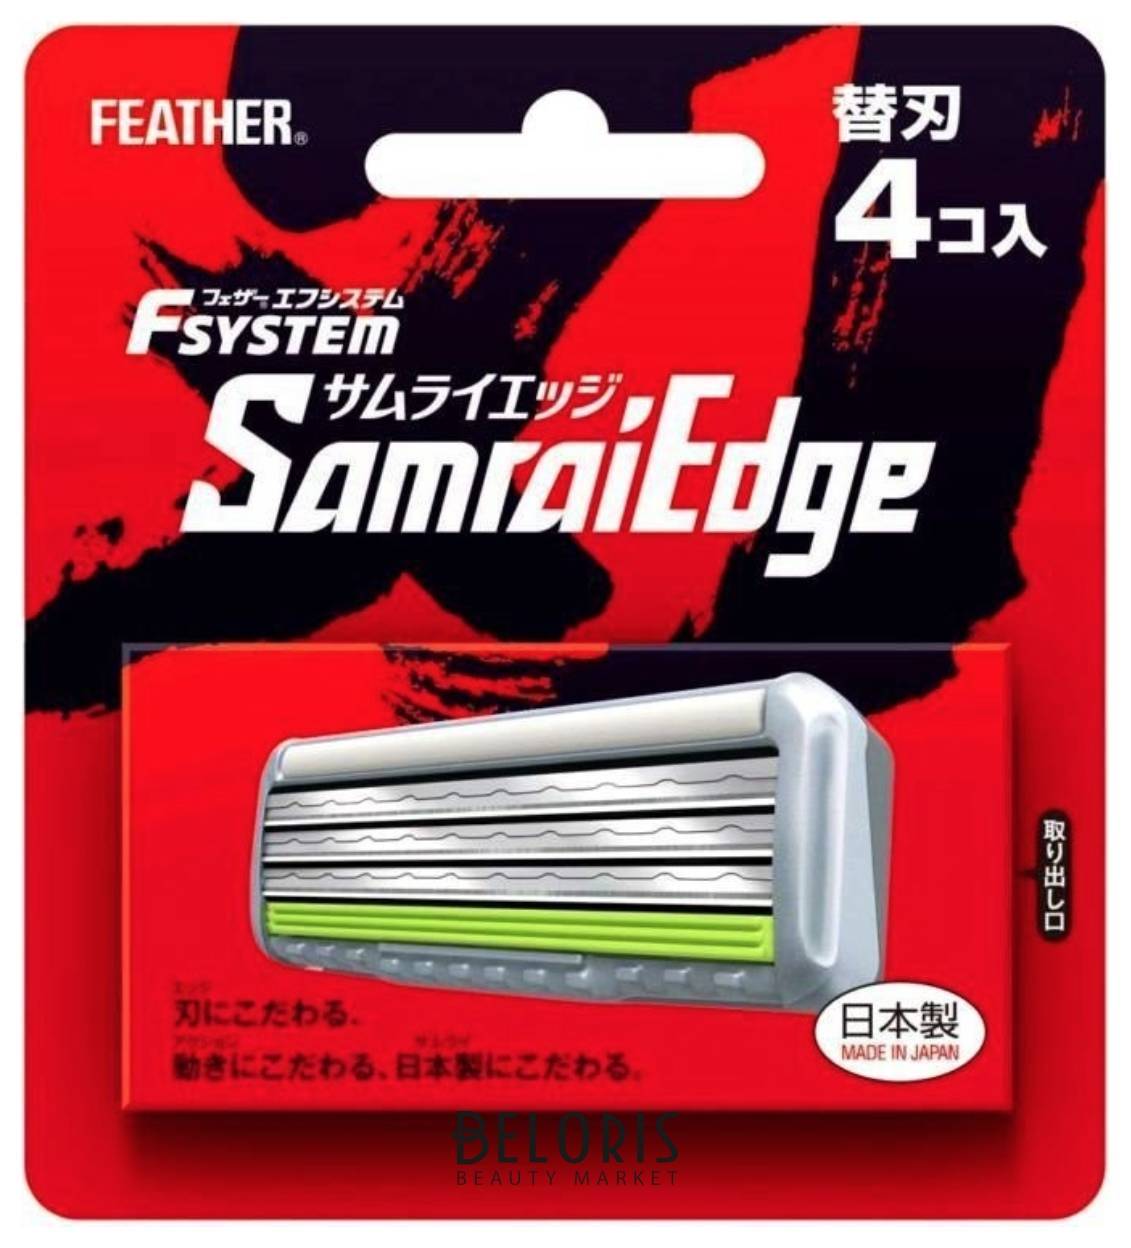 Cменные кассеты для бритвы Samyrai Edge 4шт Feather